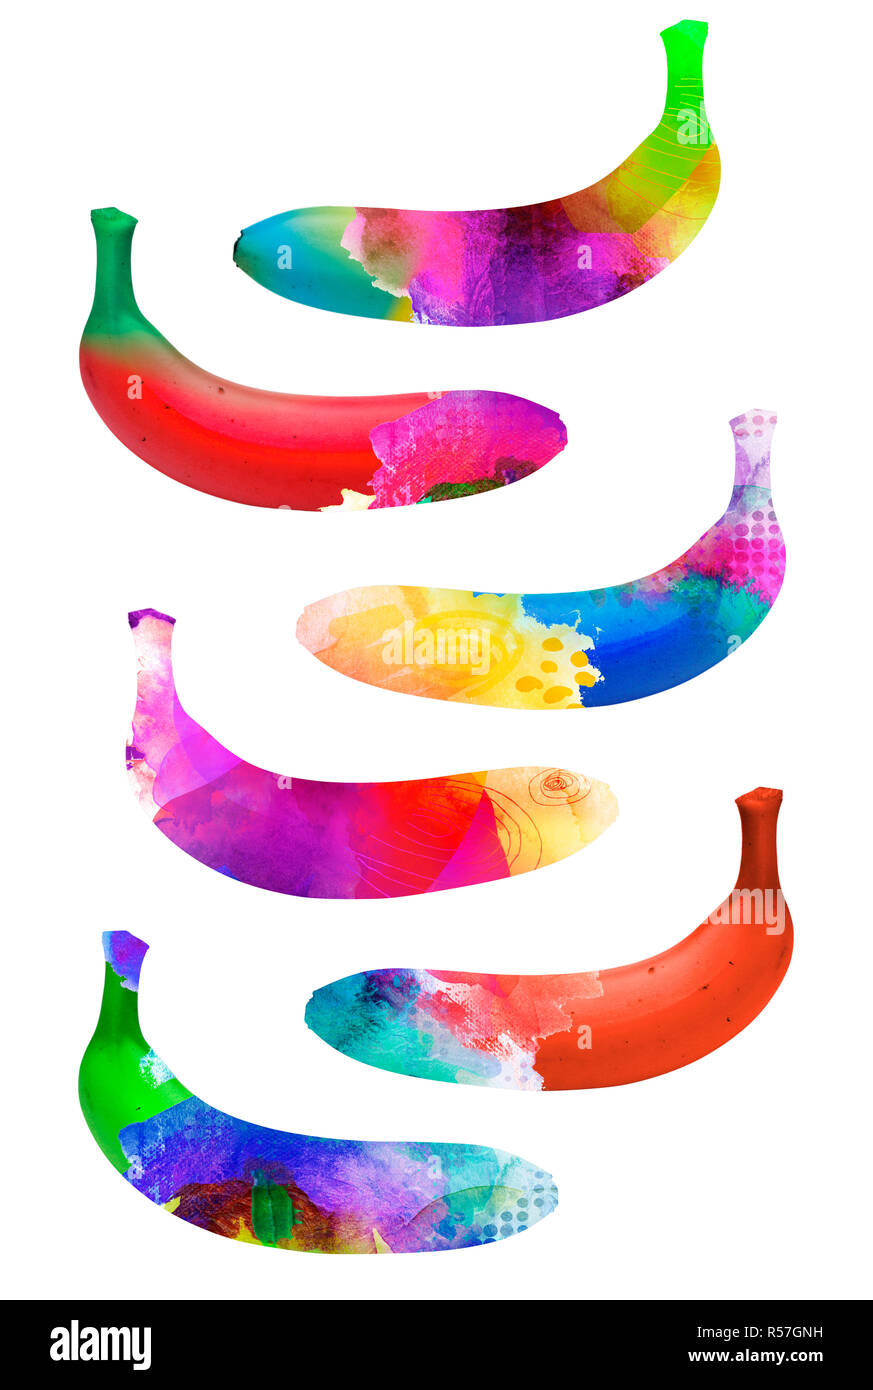 bananas colorful textures concept Stock Photo